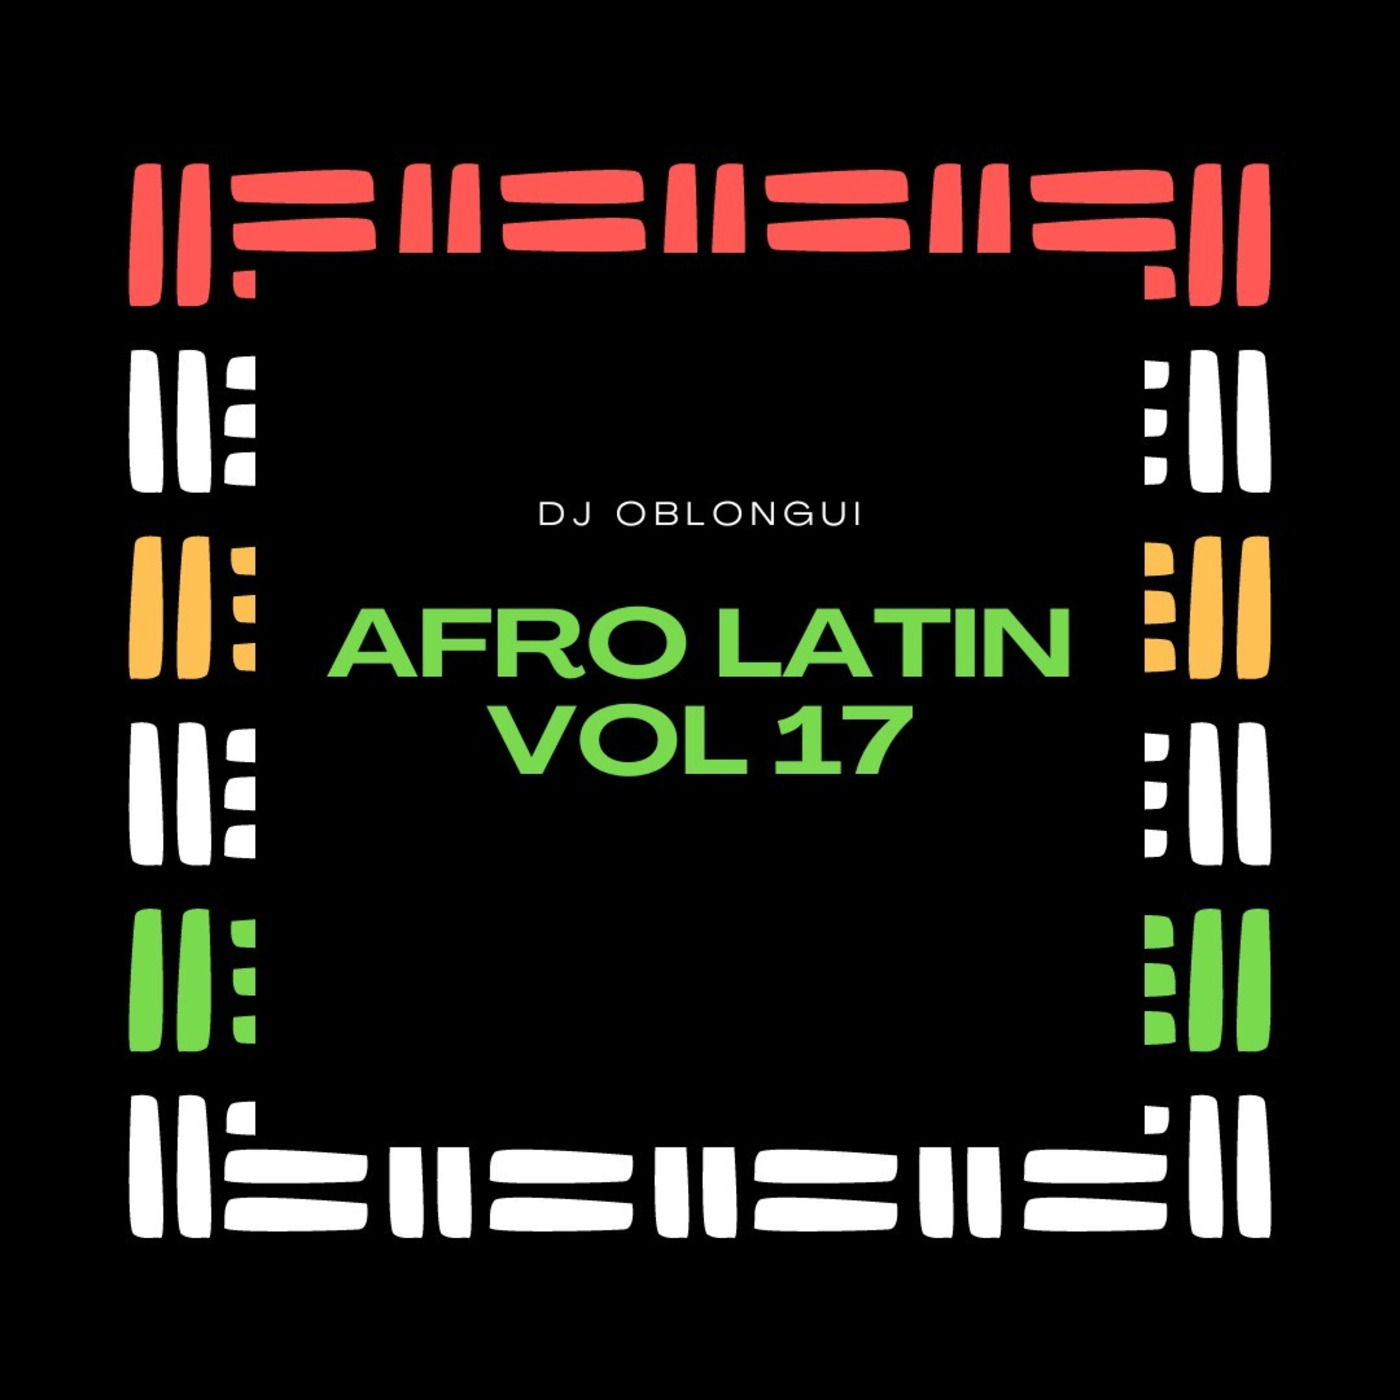 Afro Latin Vol 17 (Bob Sinclair, David Morales, Black Coffee...)